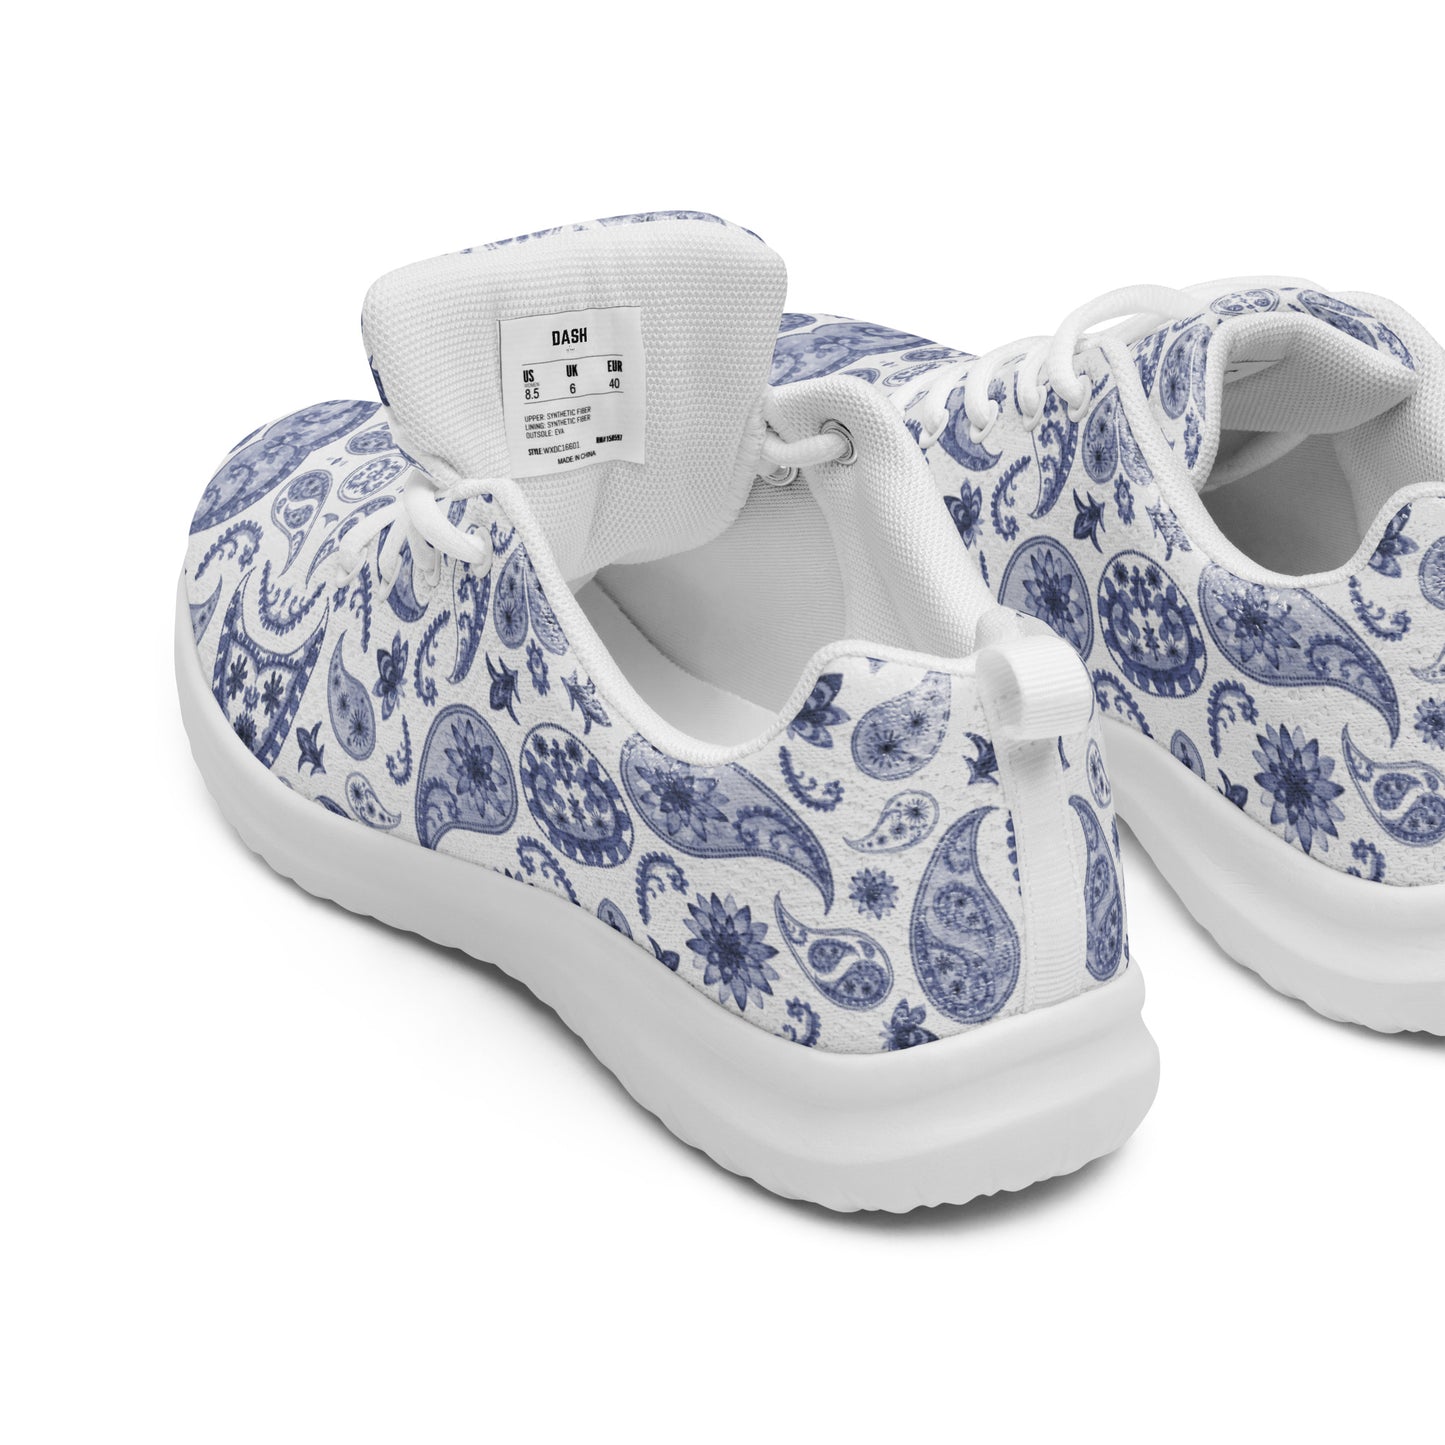 DASH Paisley White Men’s Athletic Shoes Lightweight Breathable Design by IOBI Original Apparel